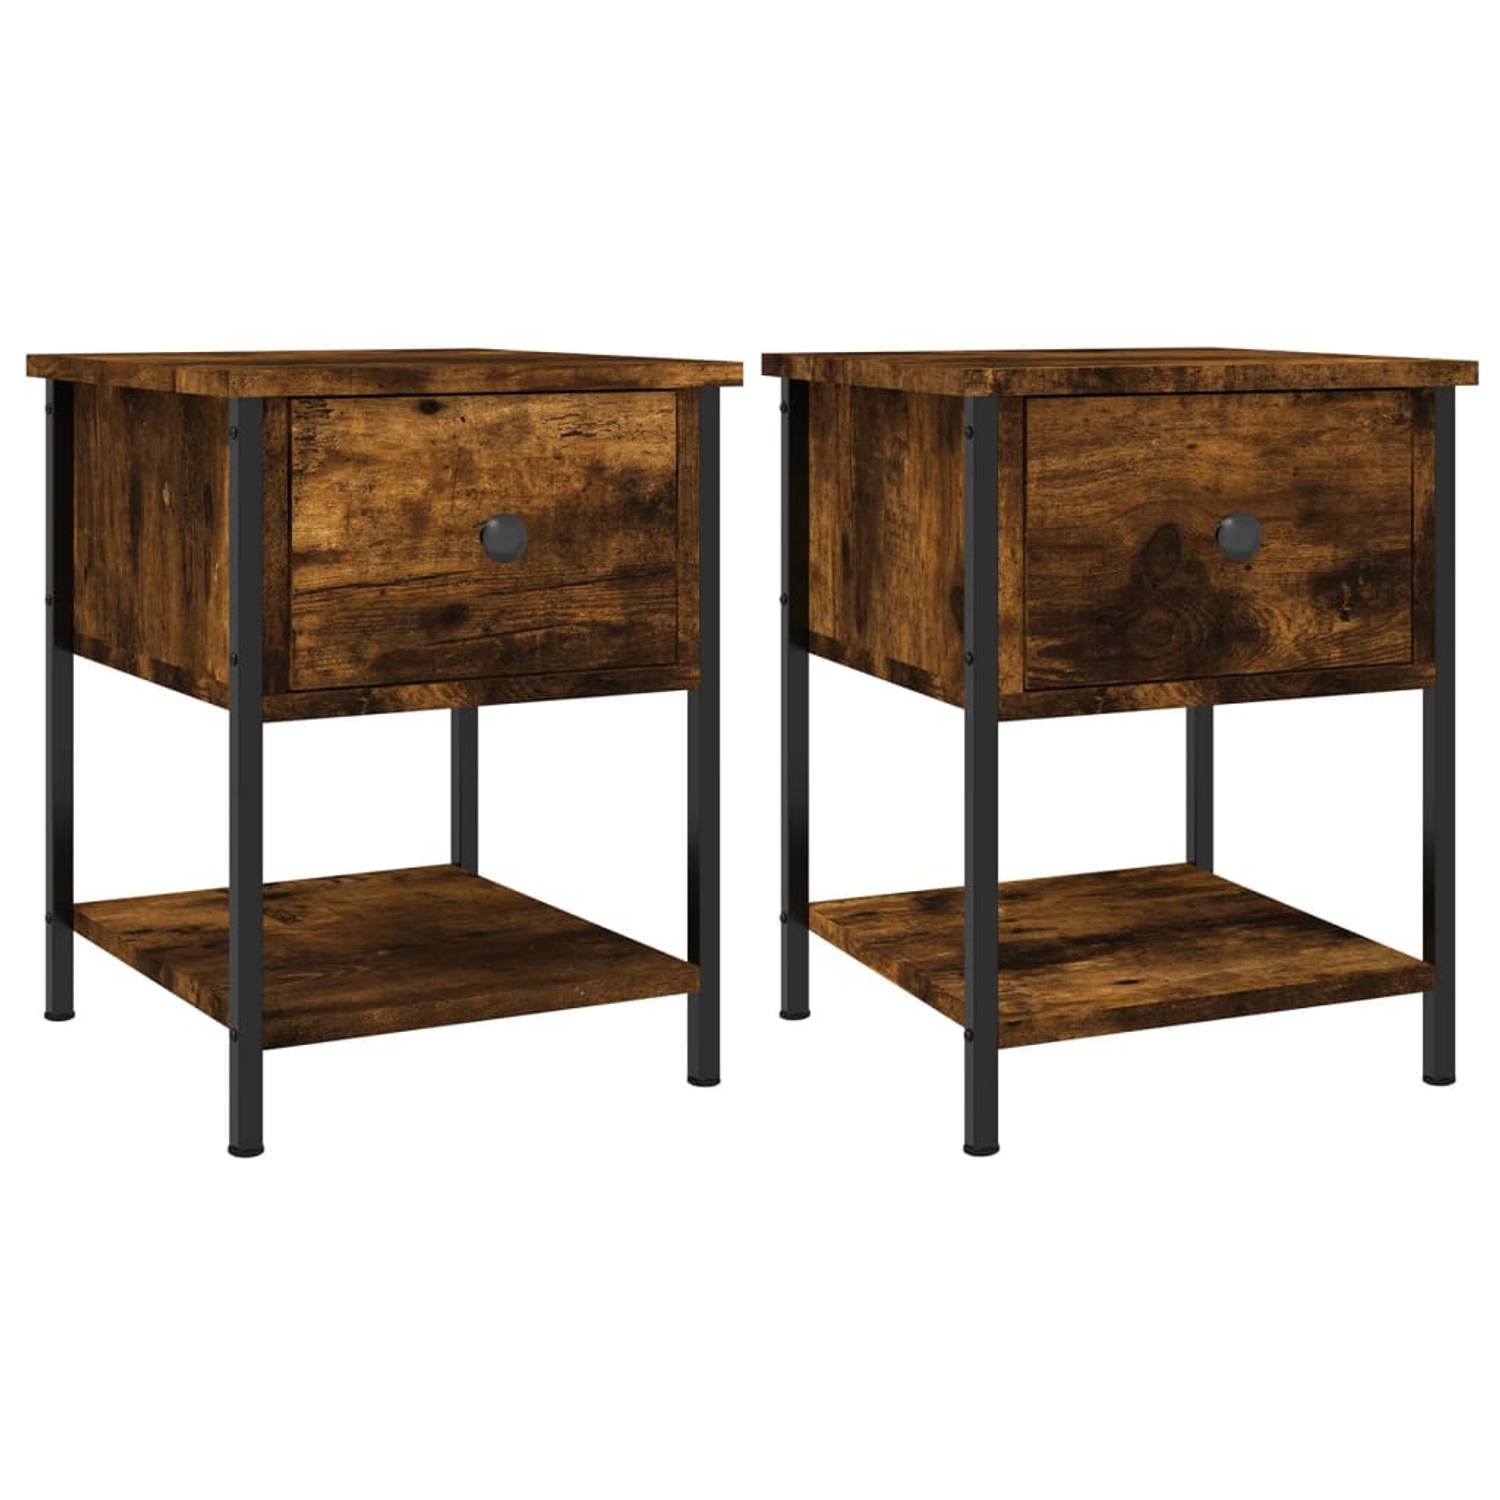 The Living Store Nachtkastjes Smoke Oak - Set van 2 - Gerookt eiken - 34 x 35.5 x 45 cm - Duurzaam hout - Stabiel metalen frame